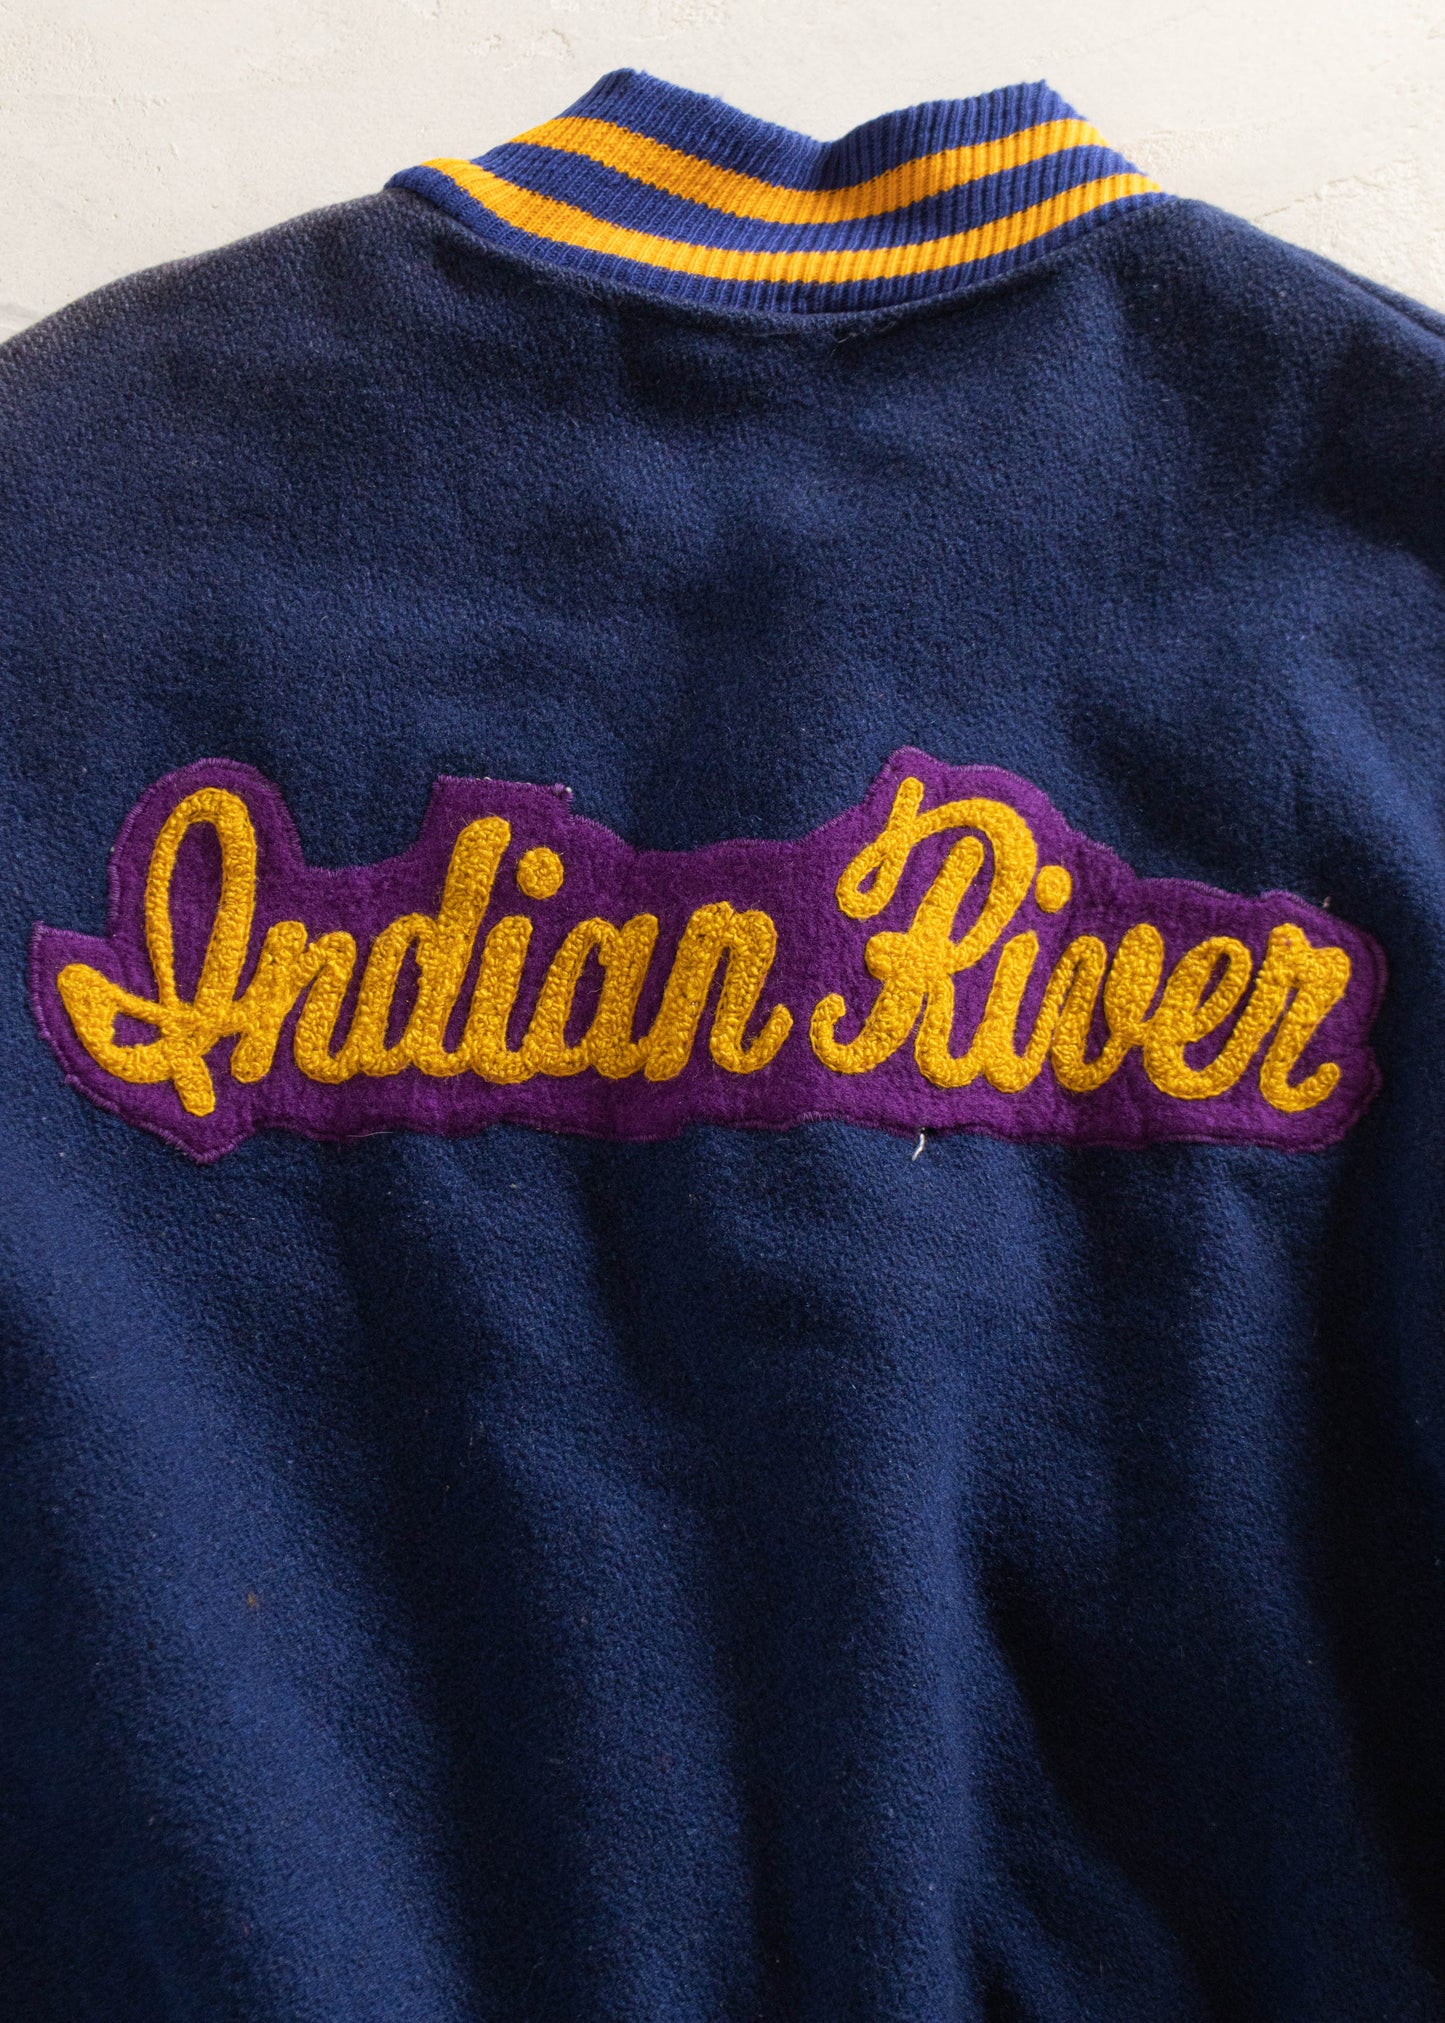 1950s Empire Sporting Goods Indian Ringer Varsity Jacket Size M/L